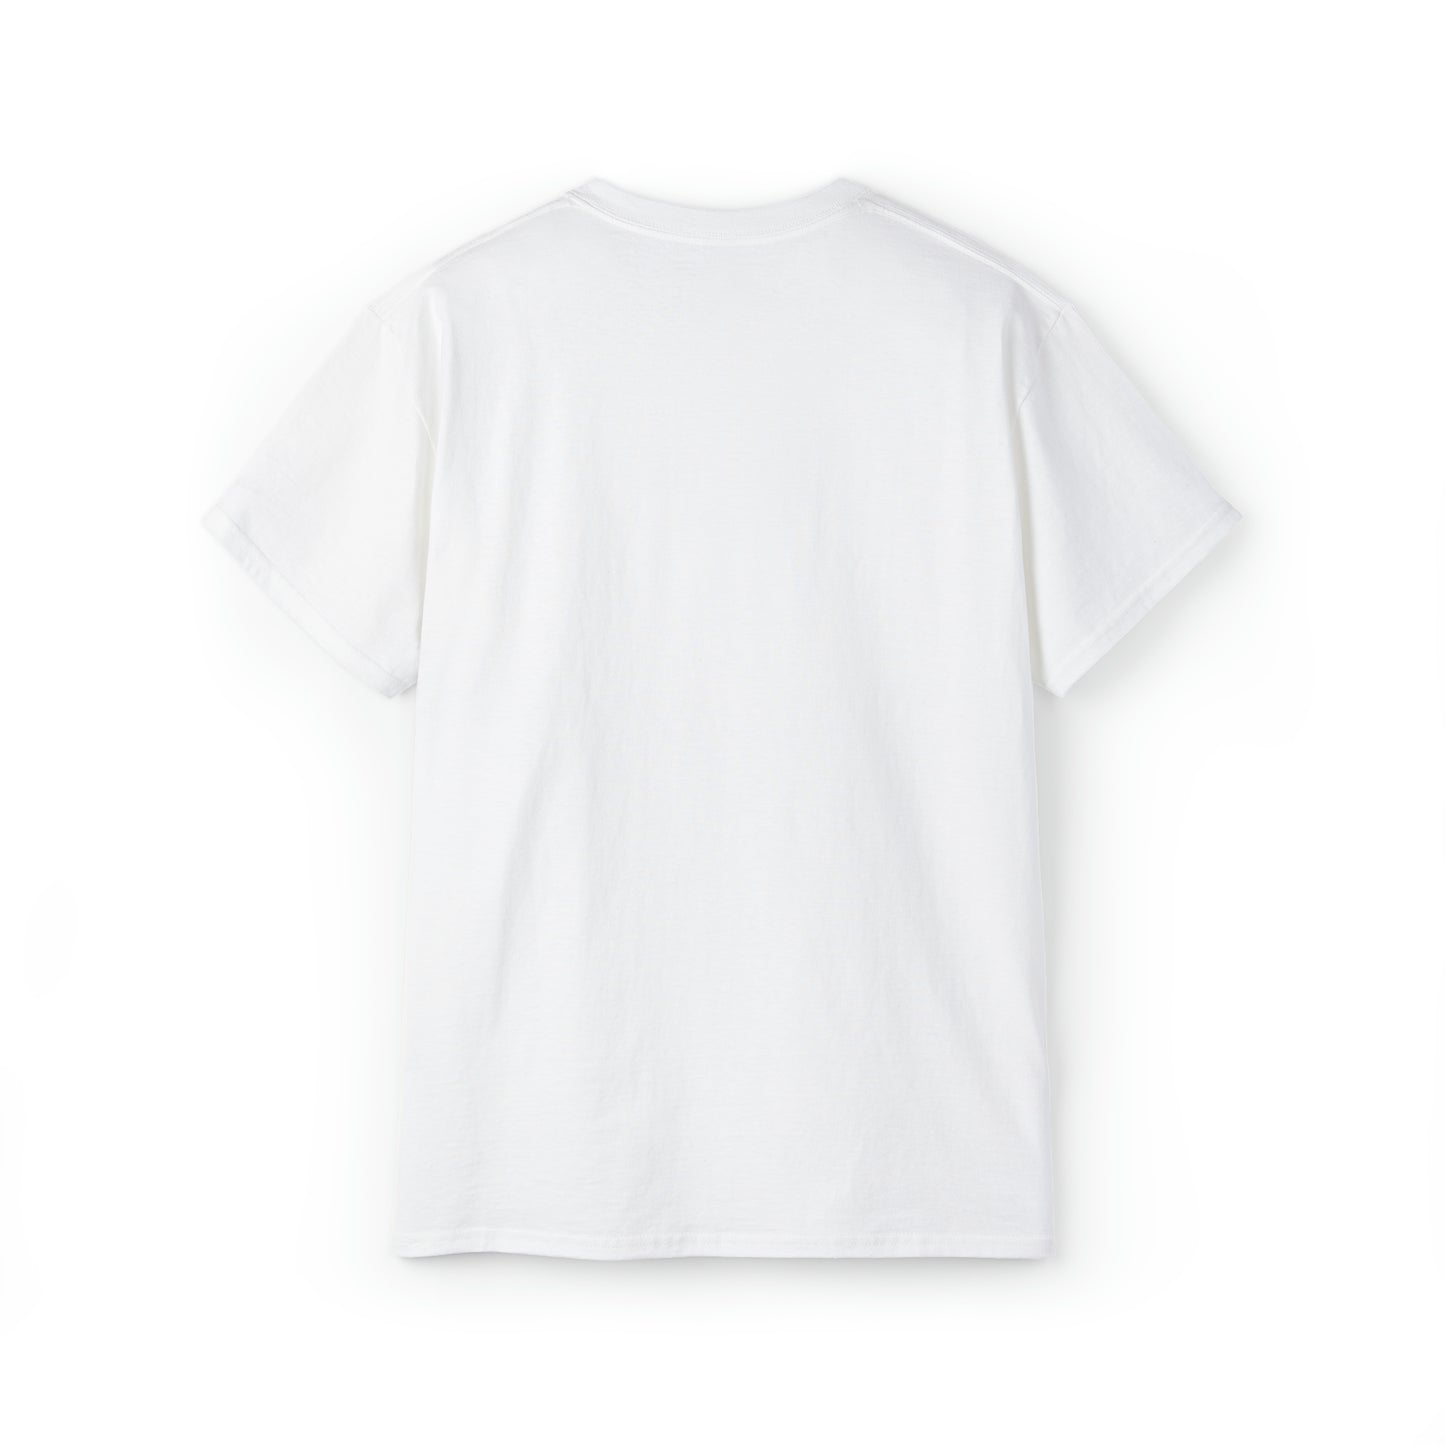 Precious Amber - Unisex T-Shirt